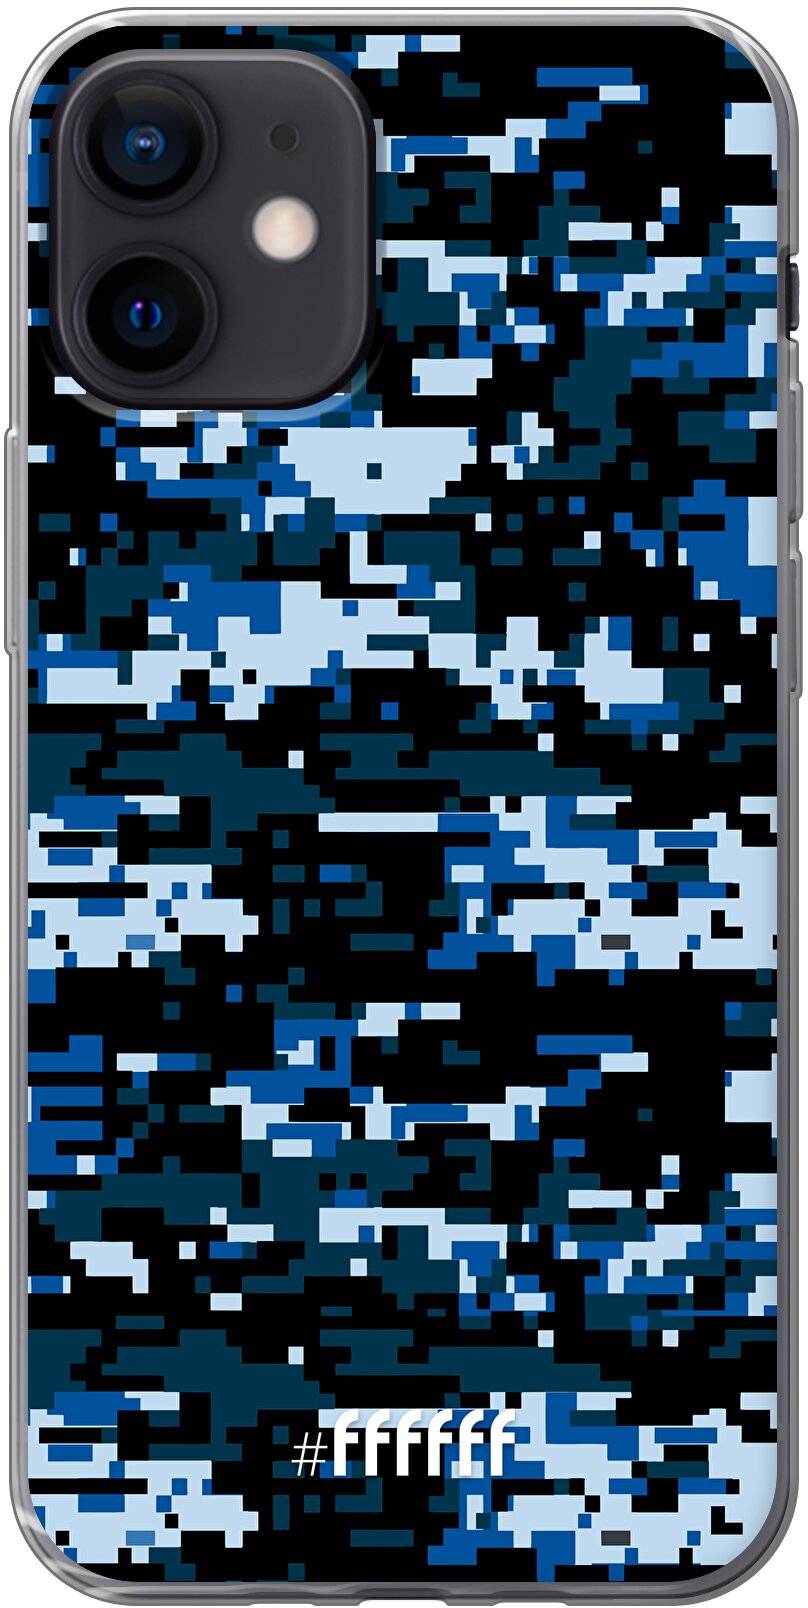 Navy Camouflage iPhone 12 Mini